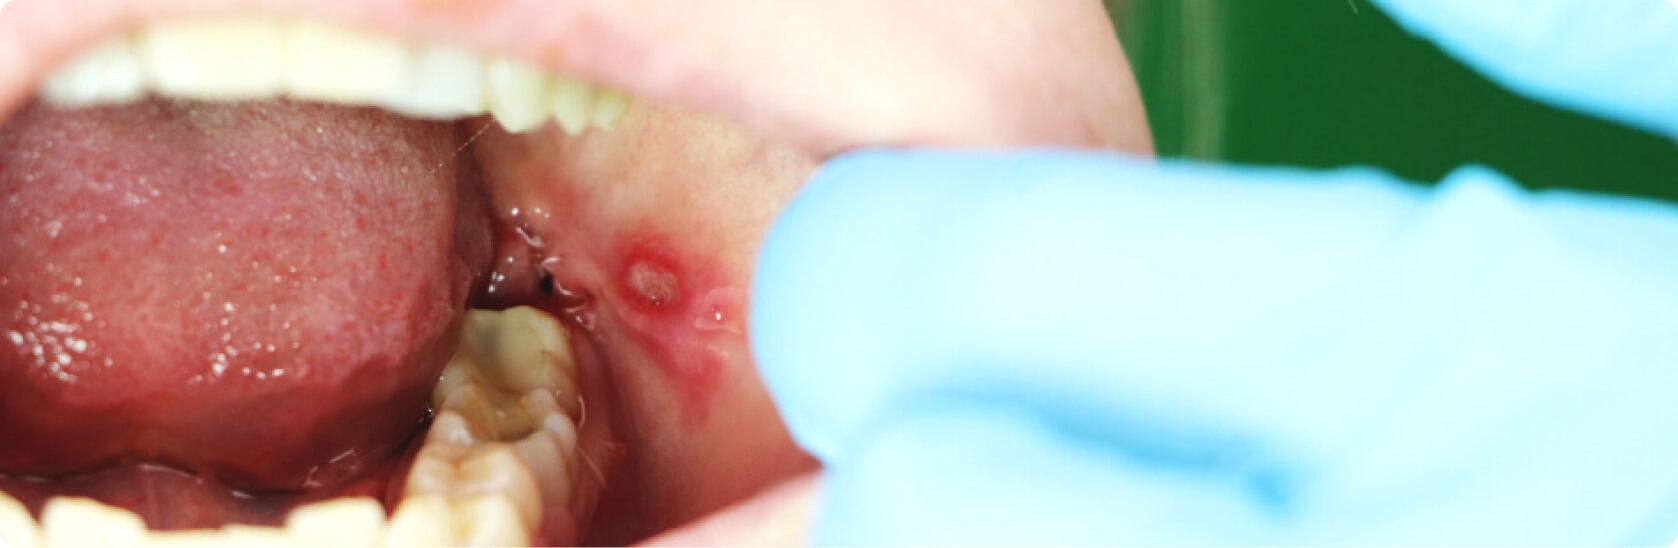 Mundfäule (Stomatitis) - Was ist eine Mundfäule?